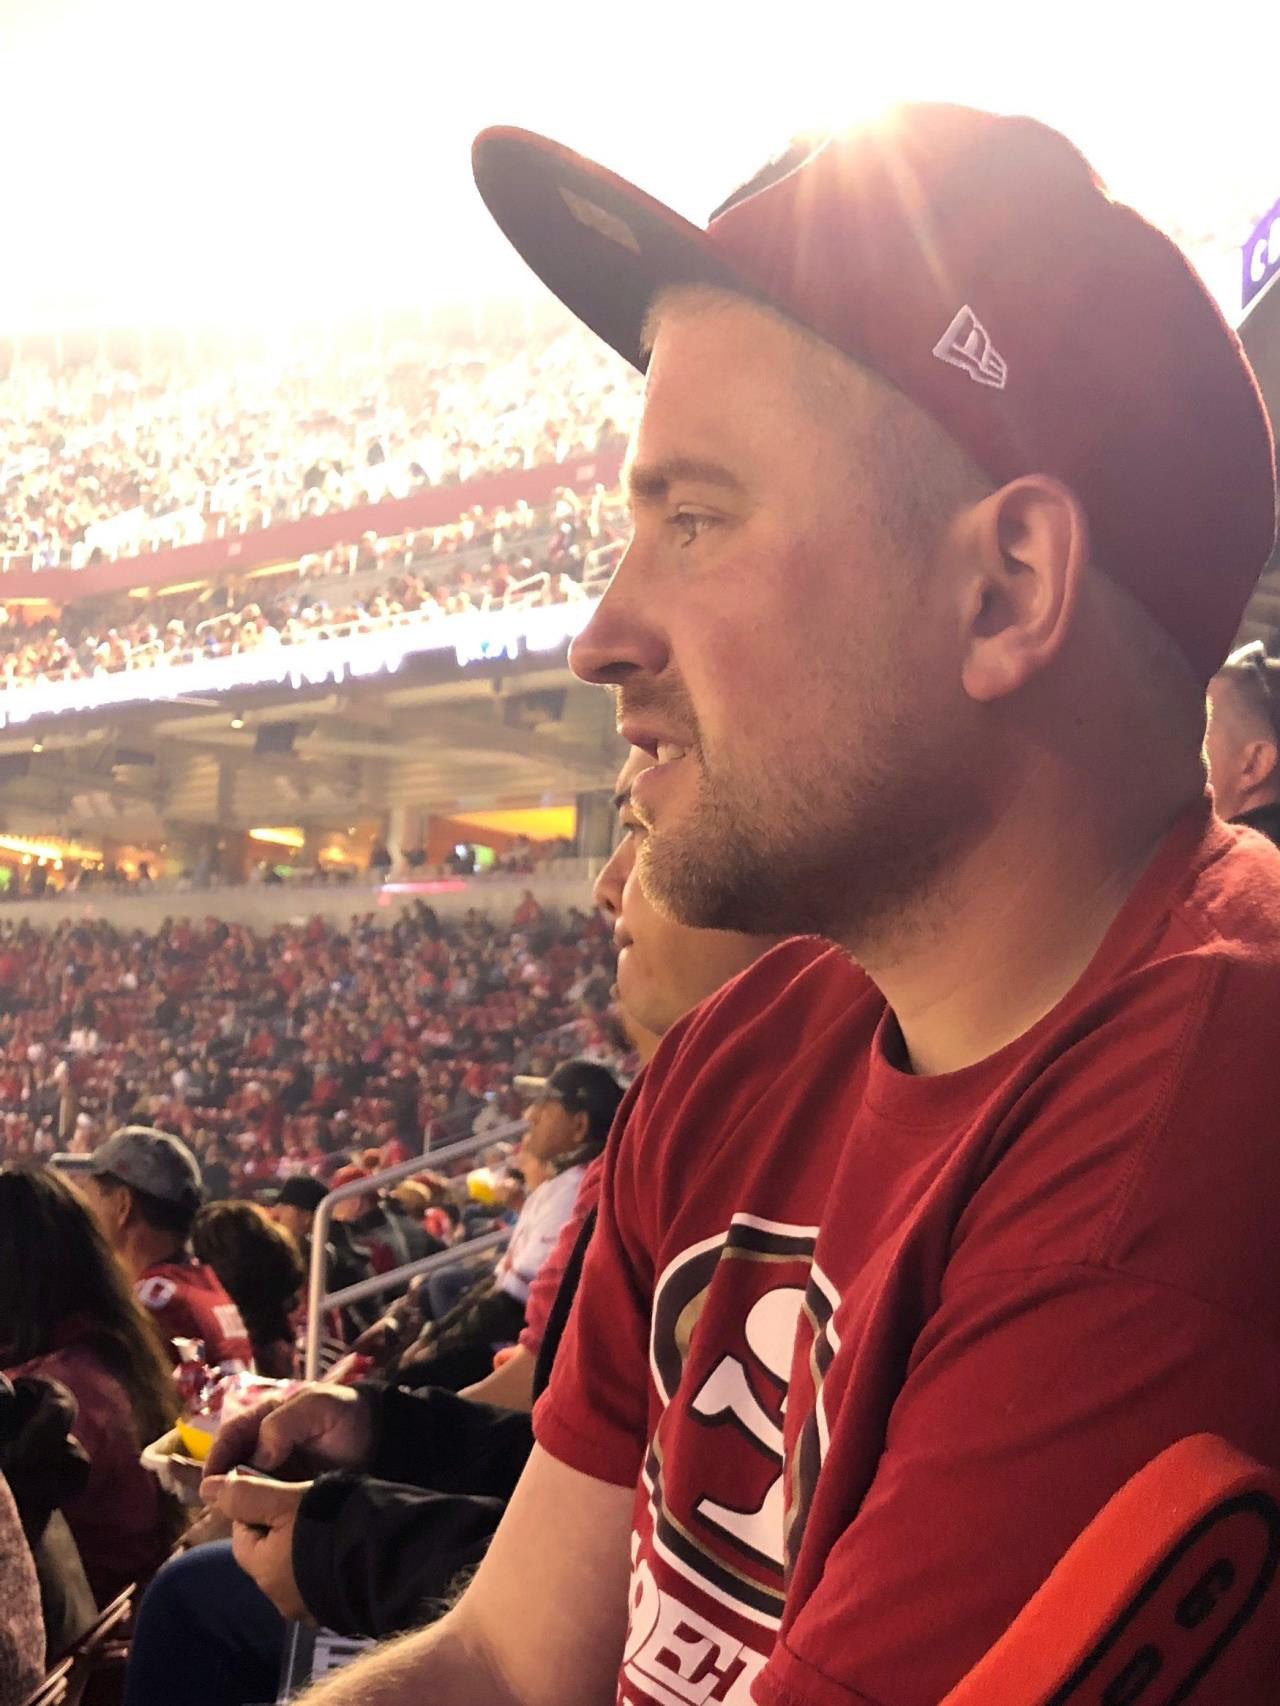 PHOTO: Ian Powers, of Spokane, Wash., went missing at the San Francisco 49ers vs. New York Giants football game at Levi’s Stadium on Monday, Nov. 12., 2018.